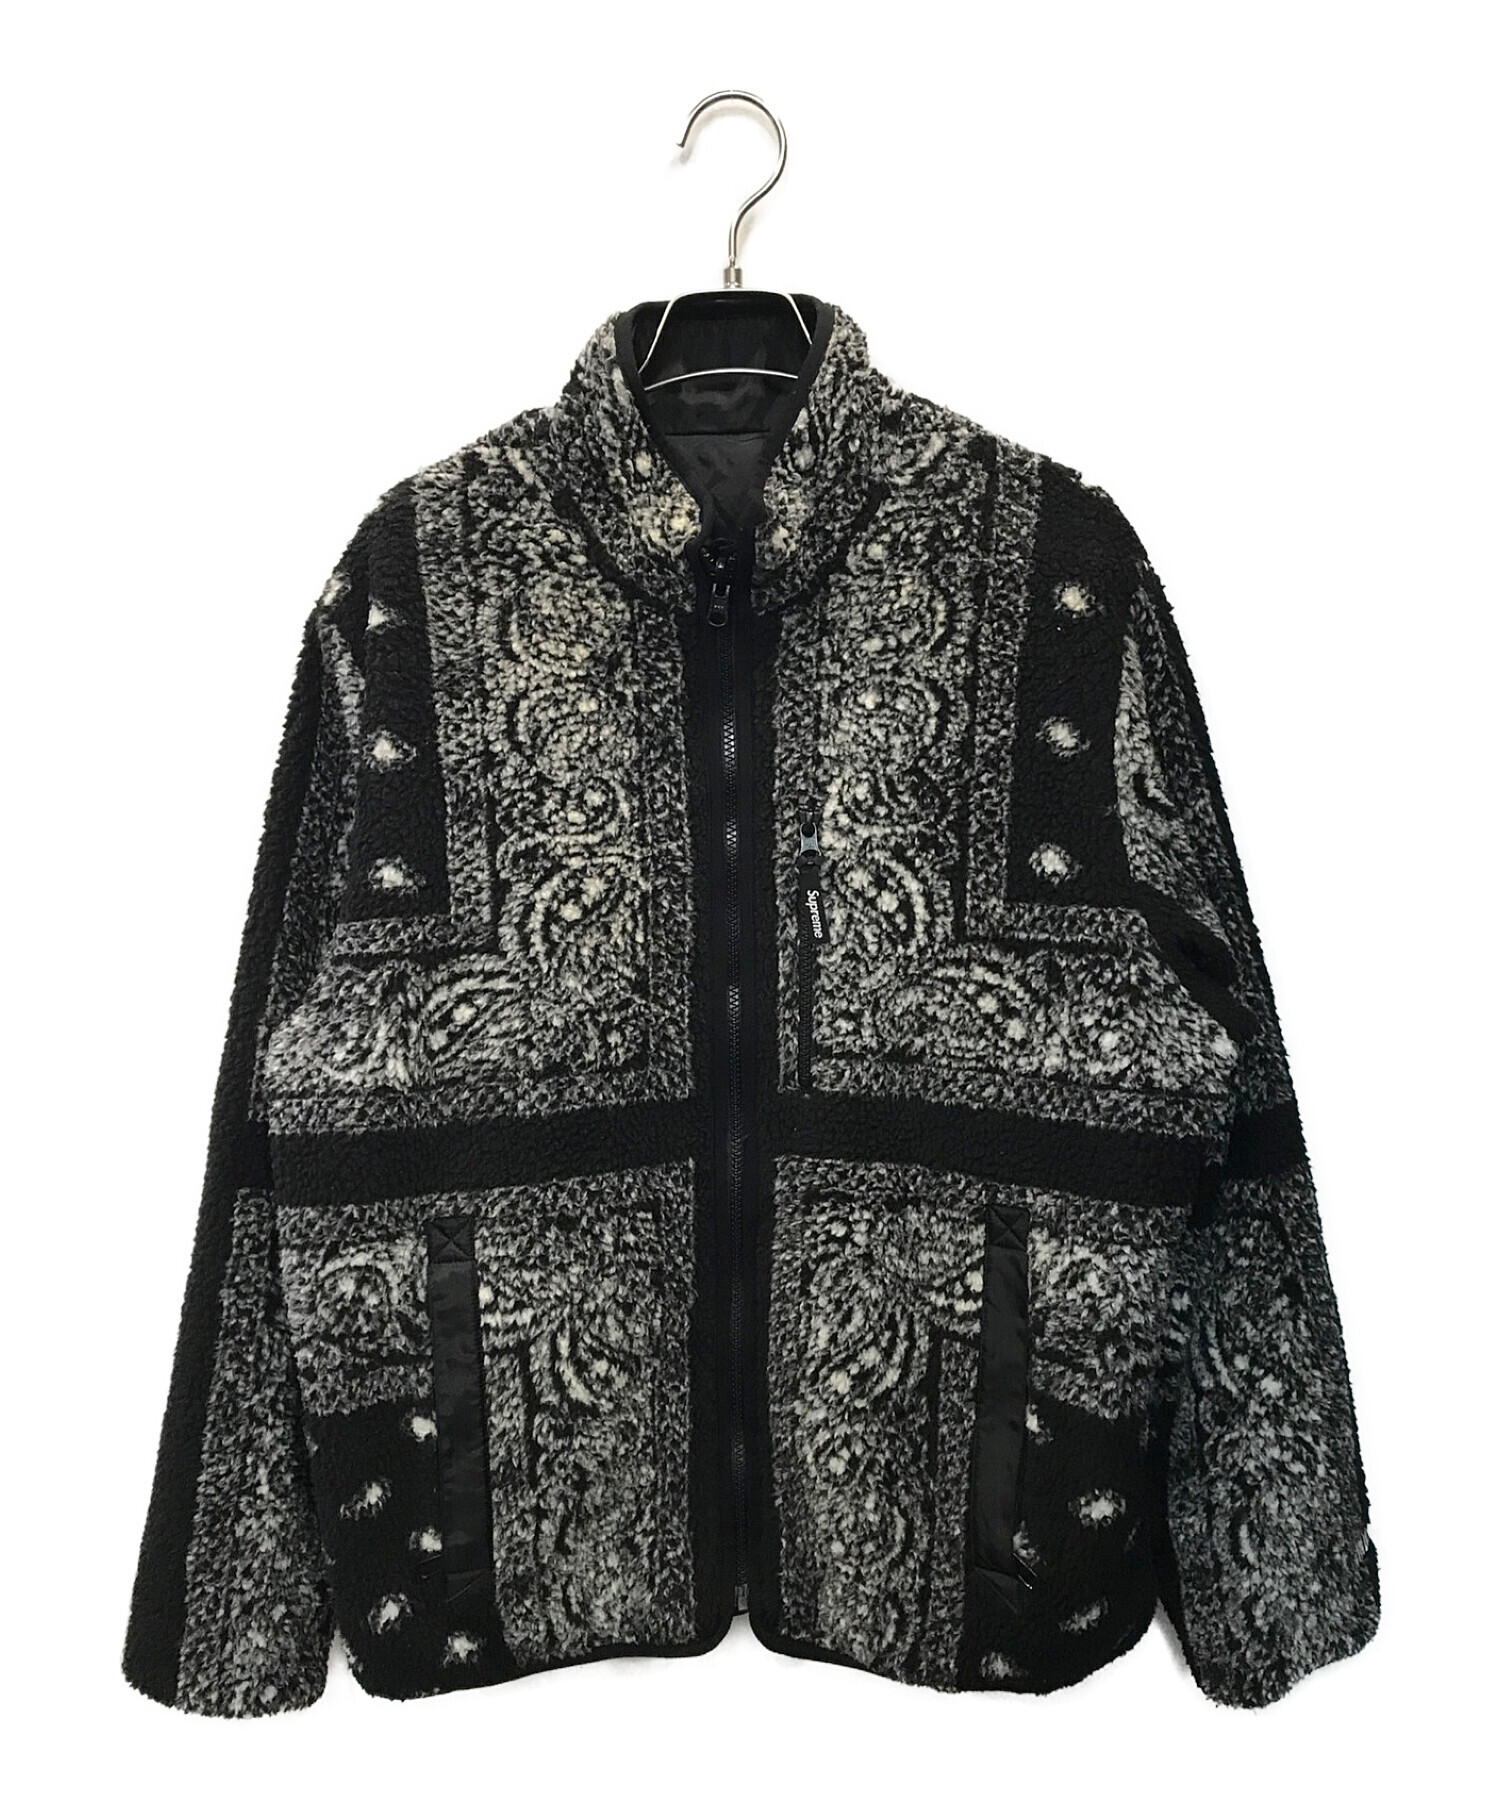 TanサイズReversible Bandana Fleece Jacket  Mサイズ